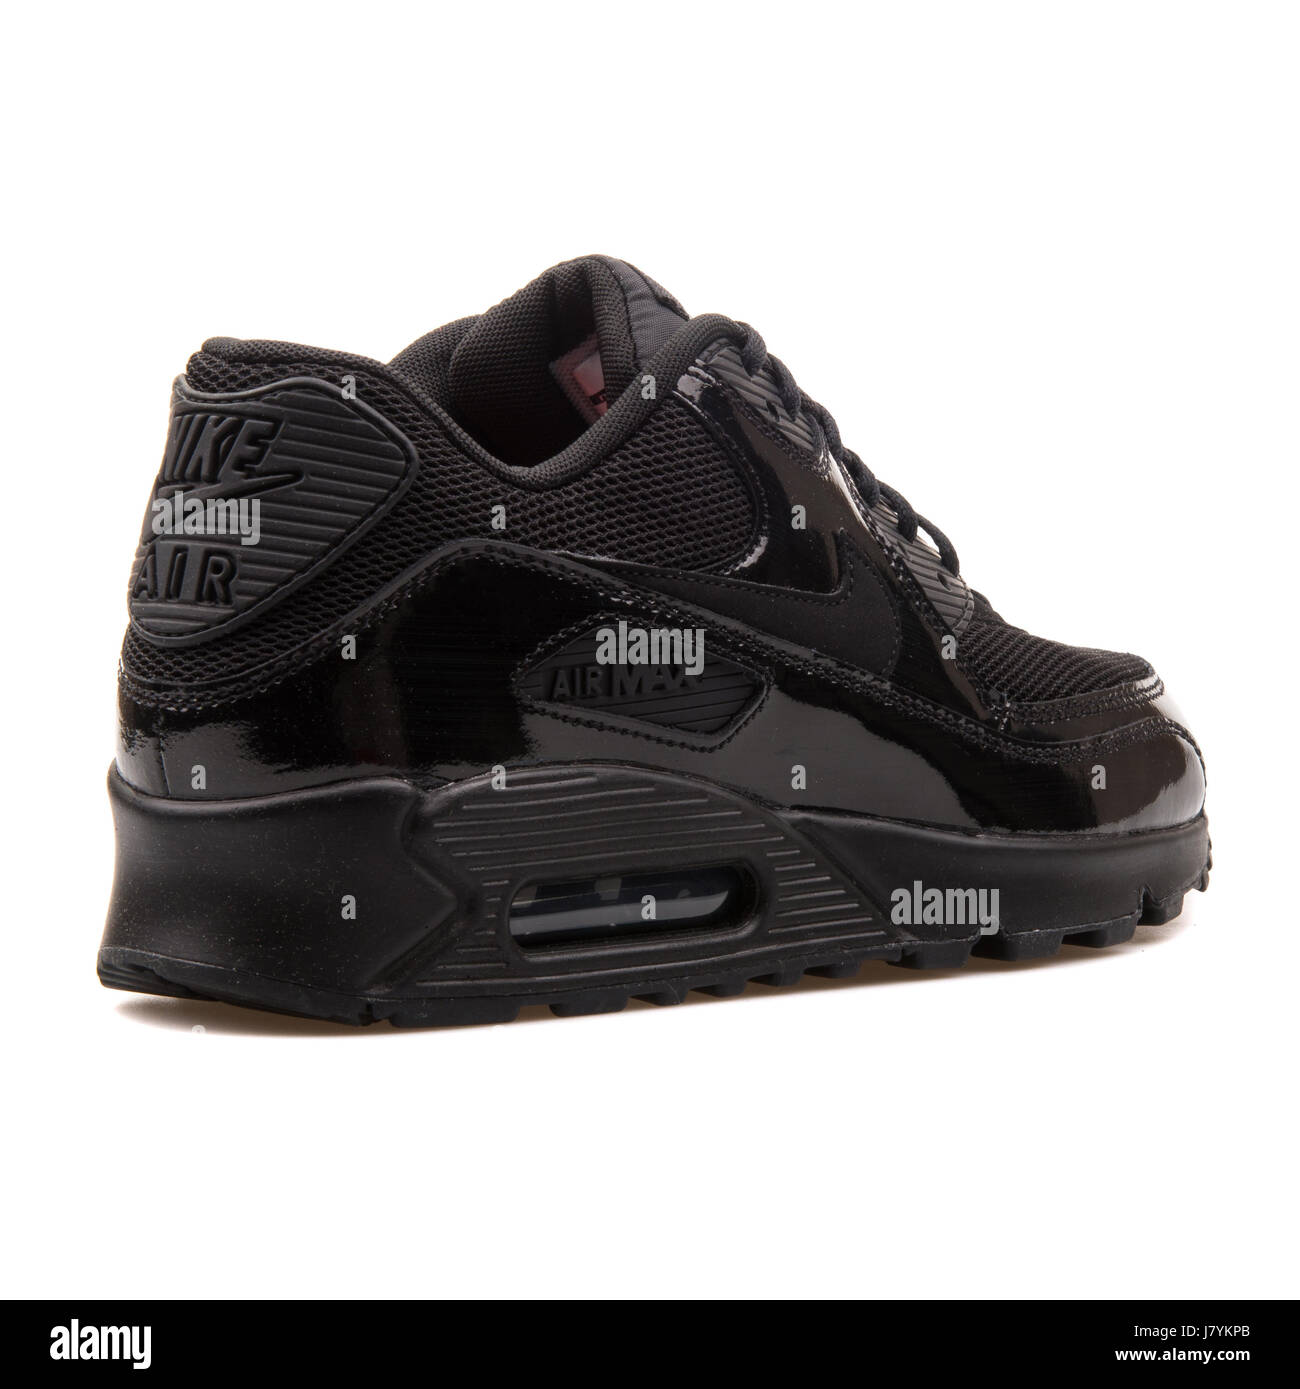 Wmn Nike Air Max 90 Premium Chaussures femmes Noir Brillant - 443817-002  Photo Stock - Alamy